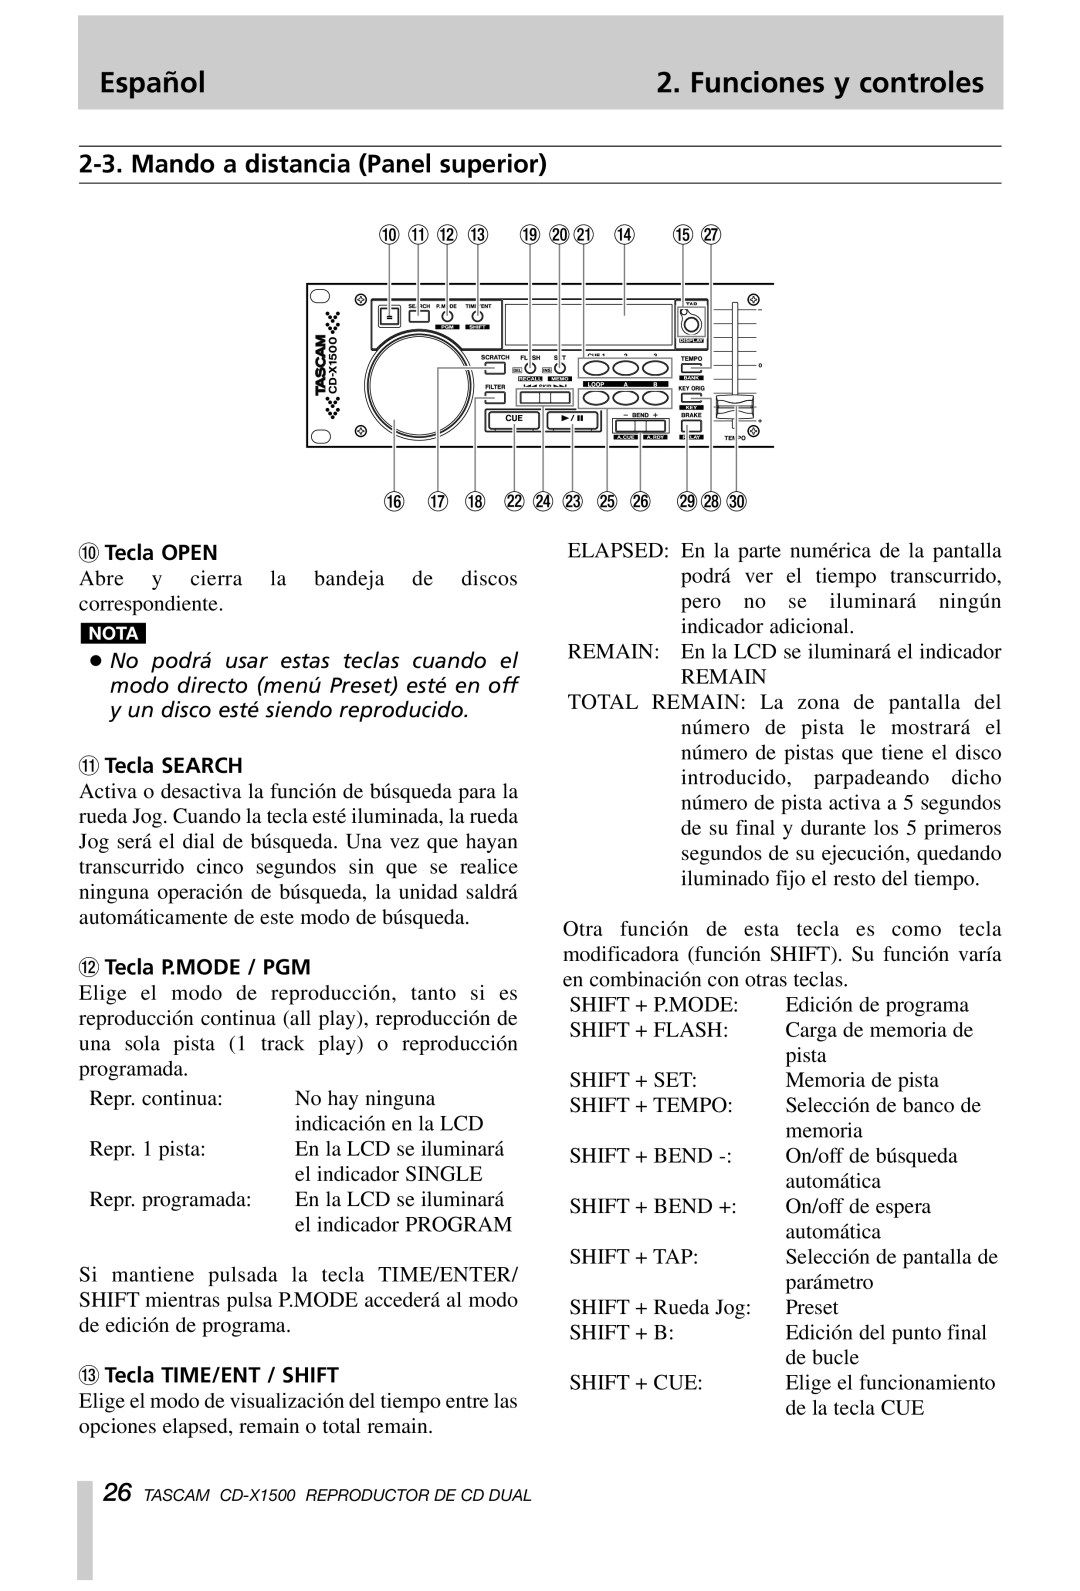 Tascam CD-X1500 owner manual Mando a distancia Panel superior, Español, Funciones y controles, Tecla OPEN, q Tecla SEARCH 